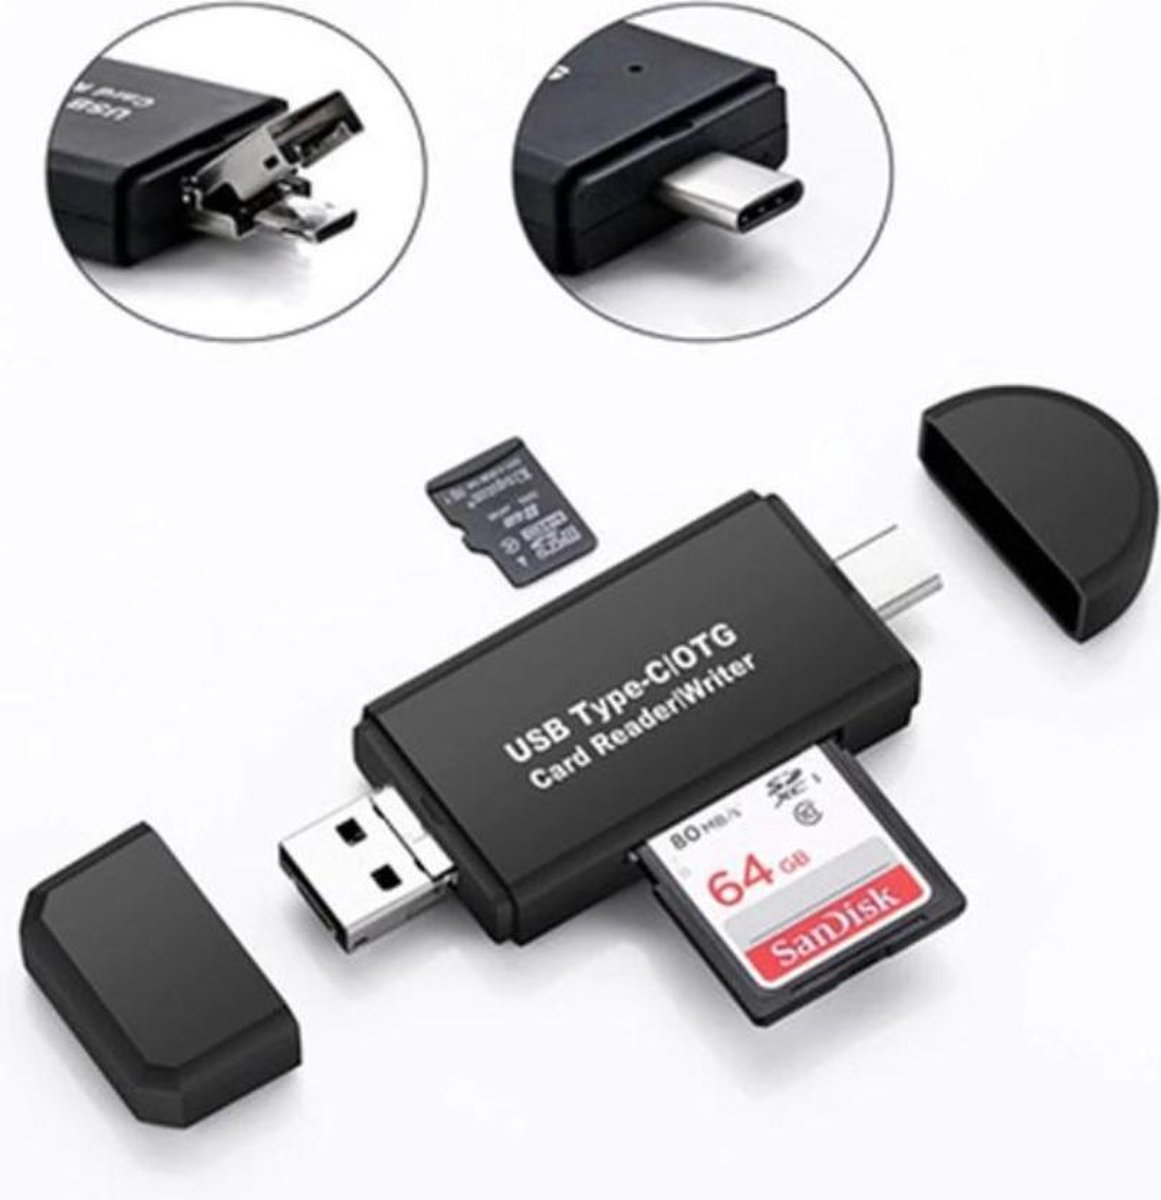 Jumalu 5 in 1- USB Type-C/OTG - Card Reader/Writer - Multifunctioneel - Micro USB - USB - USB-C , SD - Micro SD kaart reader - Zwart - Jumalu